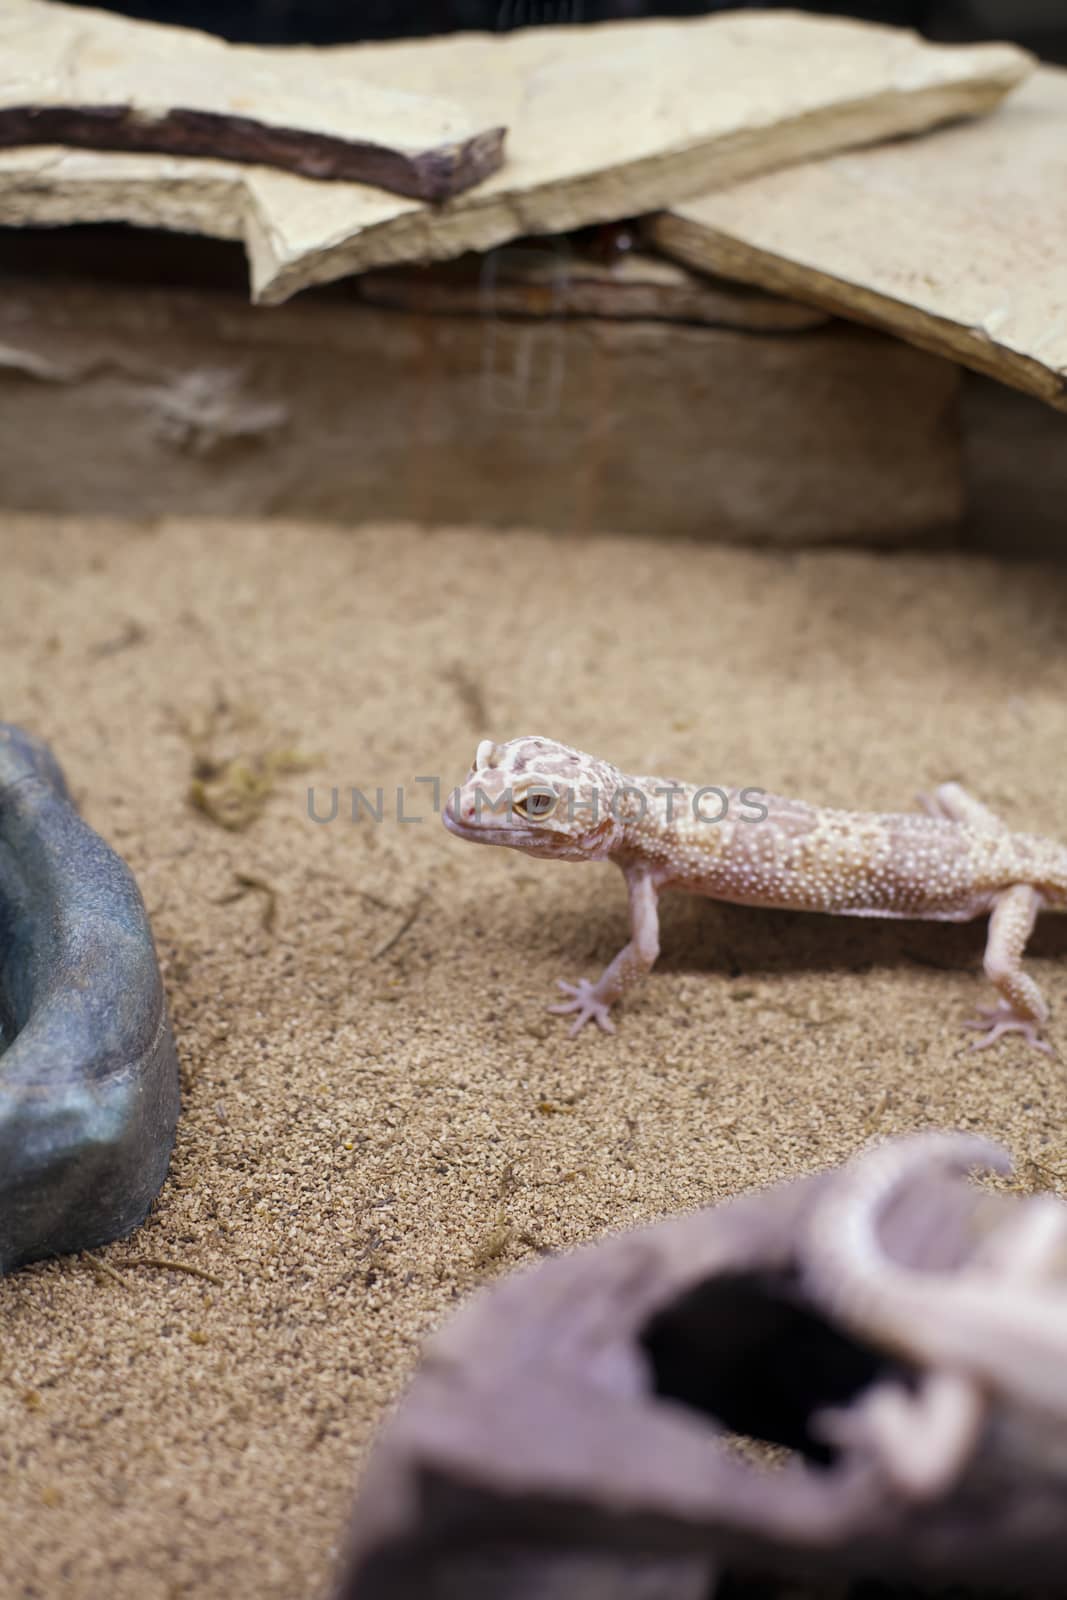 Mediteranean gecko (Hemidactylus turcicus) in a display case